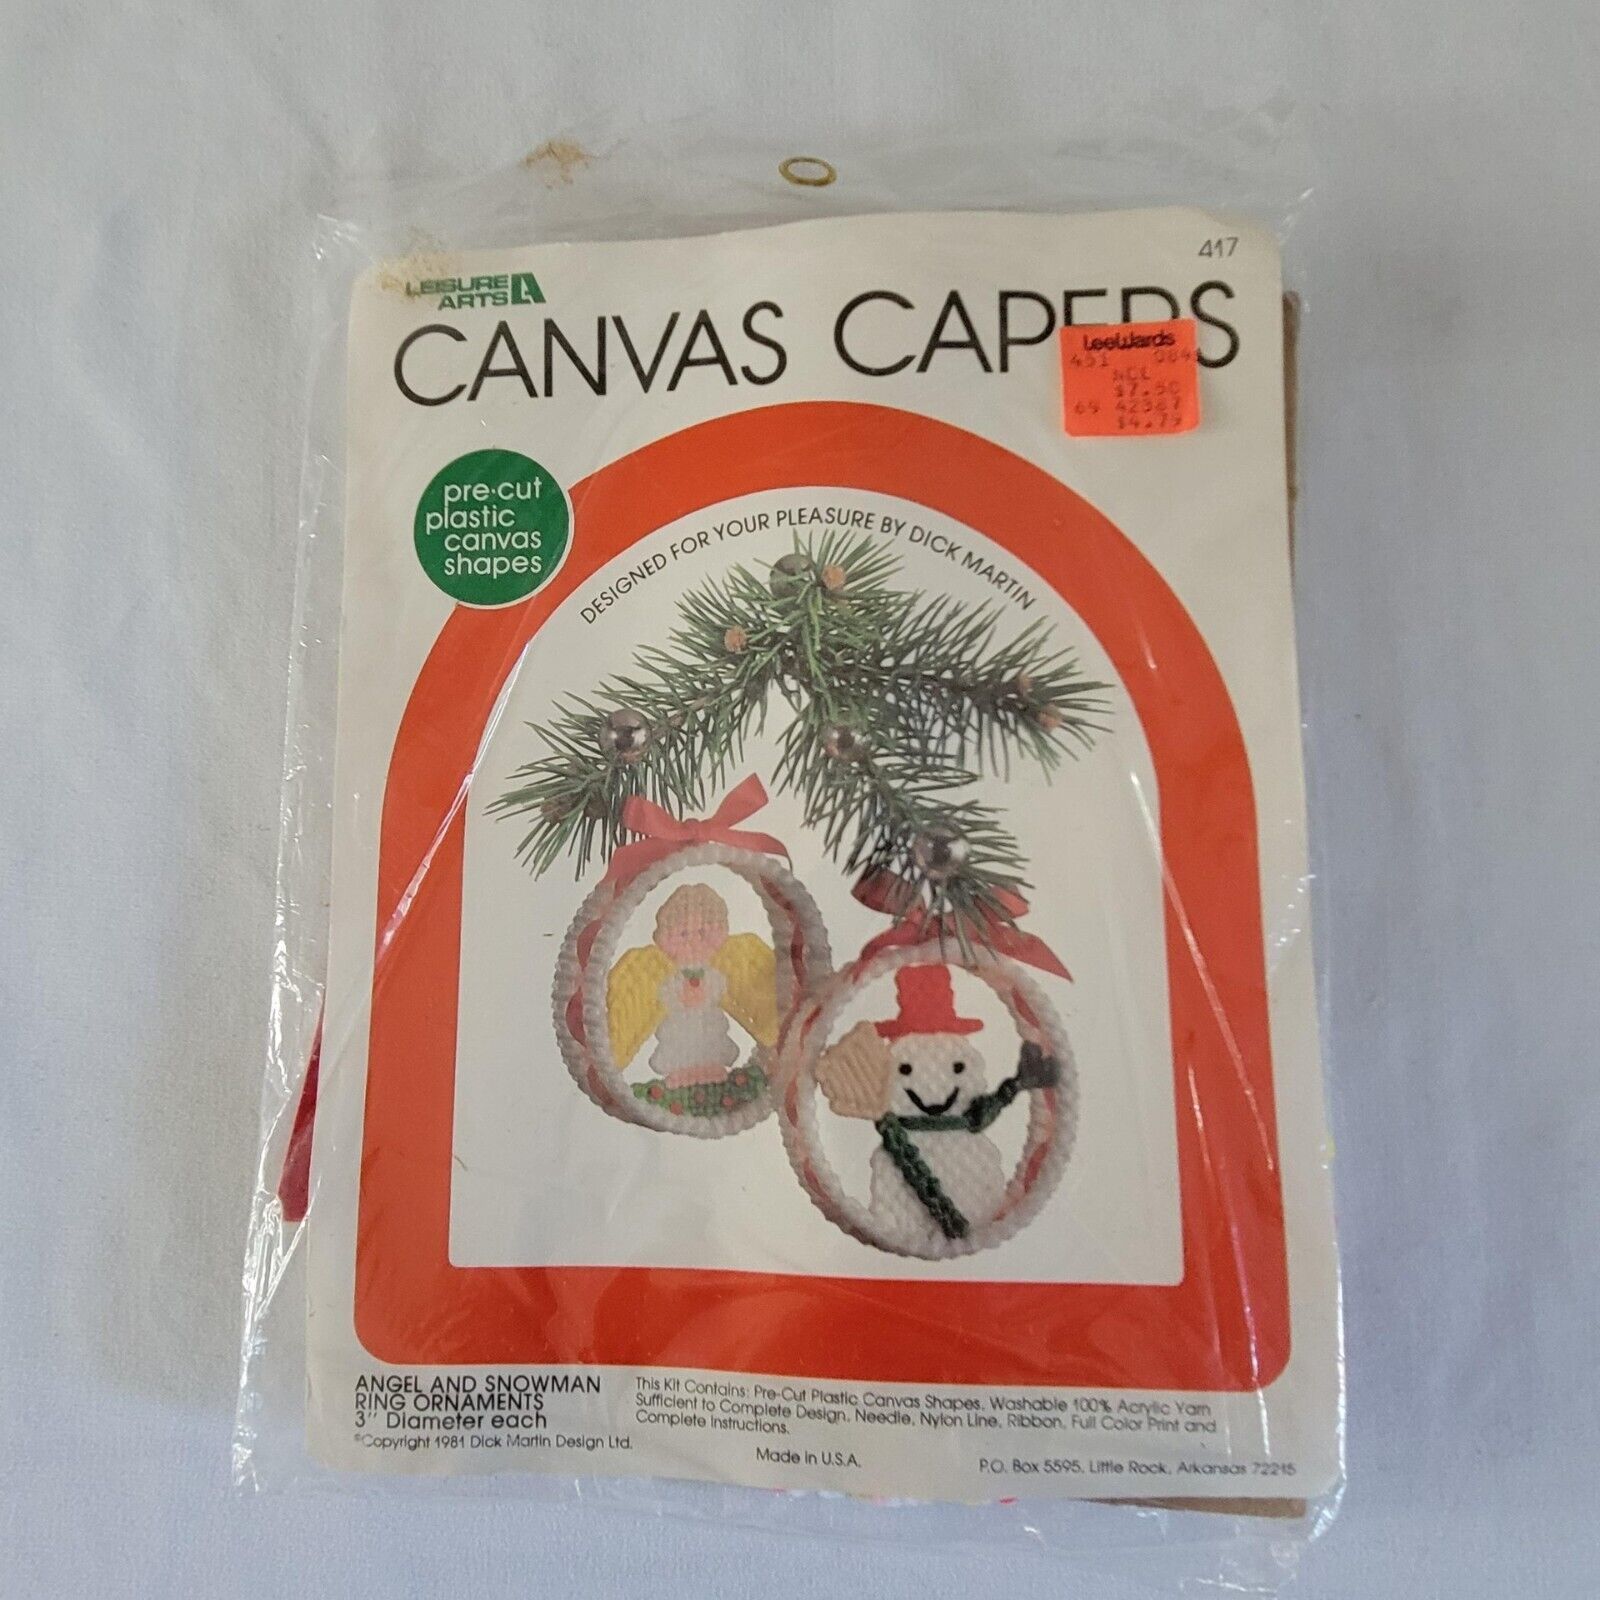 Angel Snowman Ornaments Kit Plastic Canvas Capers Leisure Arts 417 Christmas NEW - $11.87